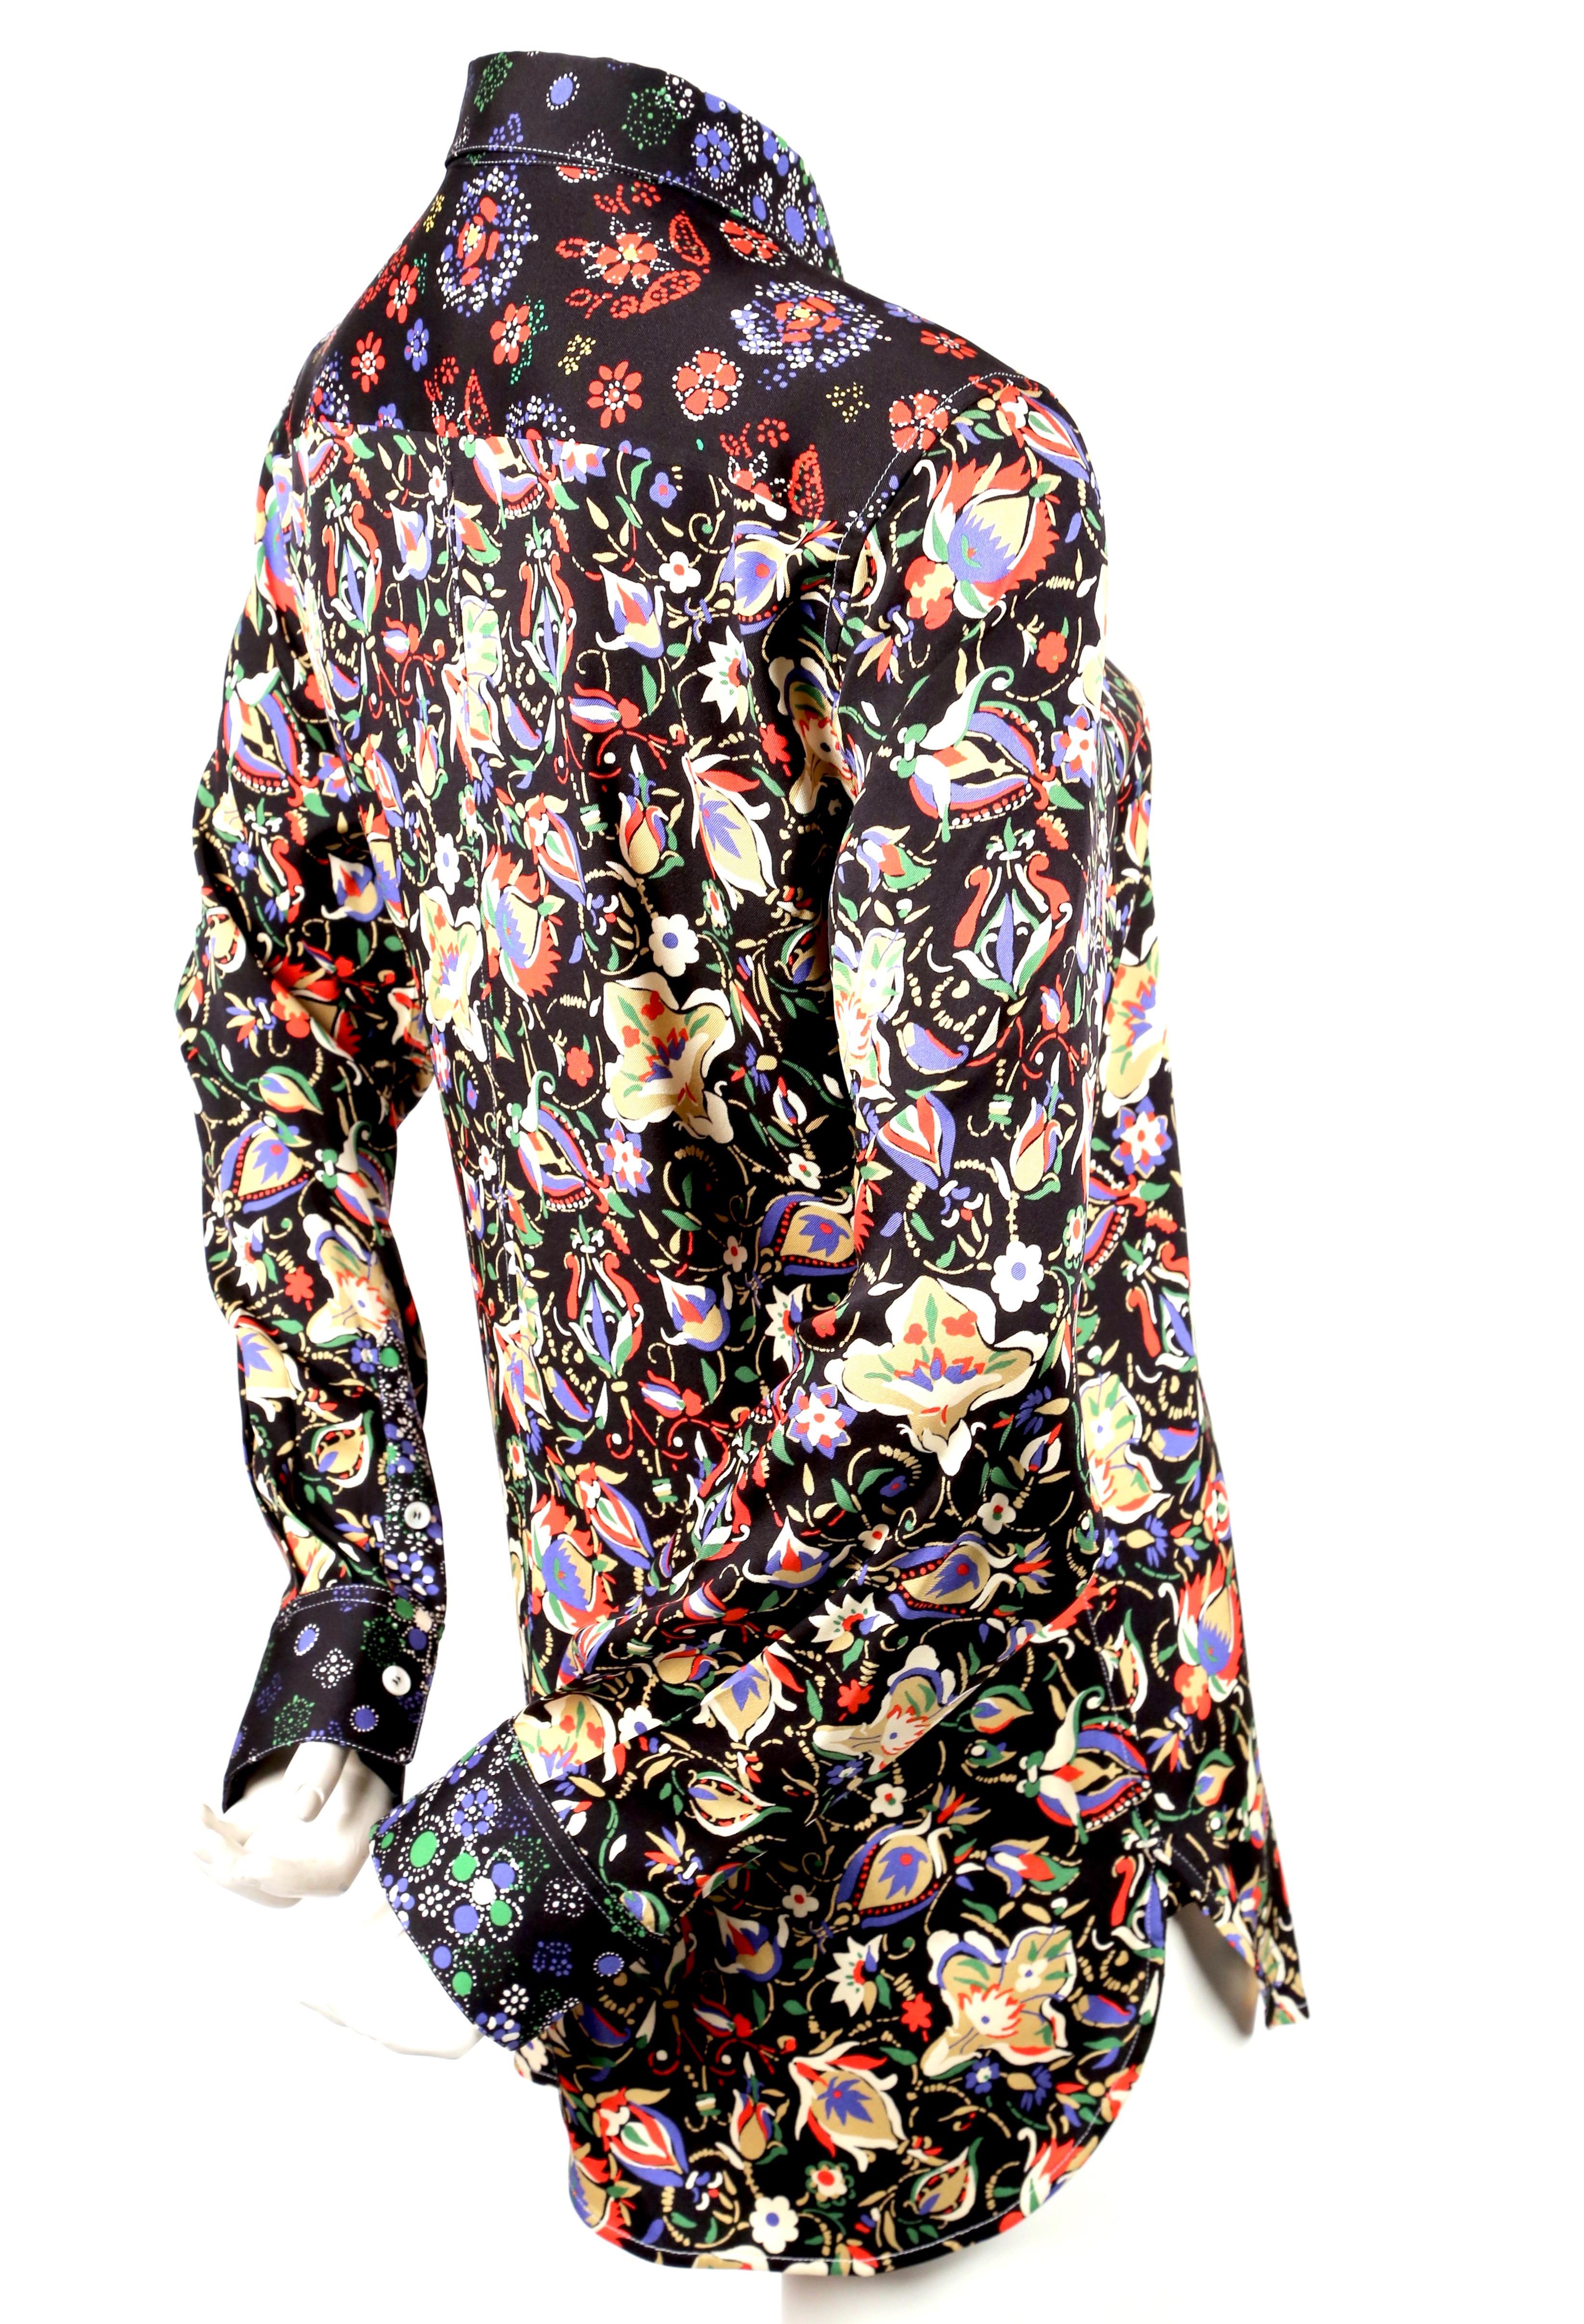 Black CELINE by PHOEBE PHILO floral printed silk shirt with ties